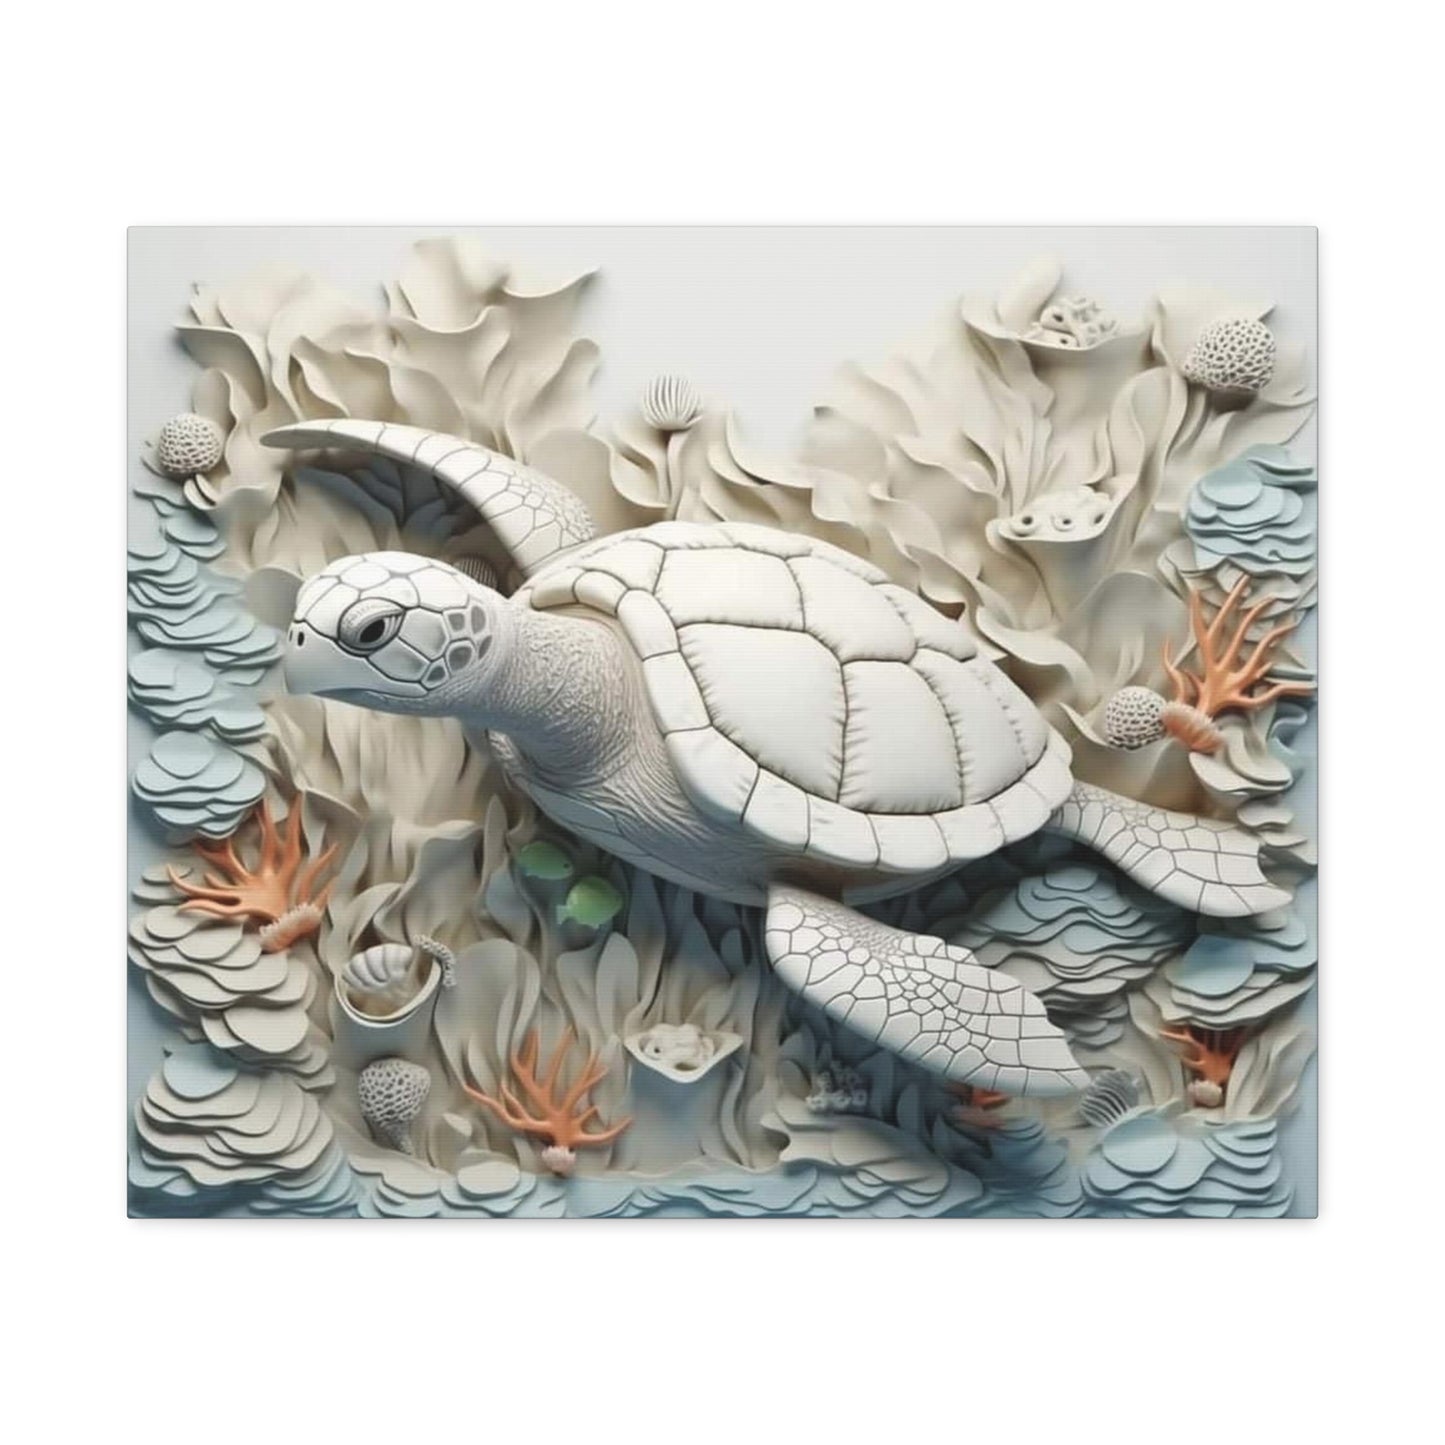 3D Turtle Canvas Gallery Wraps